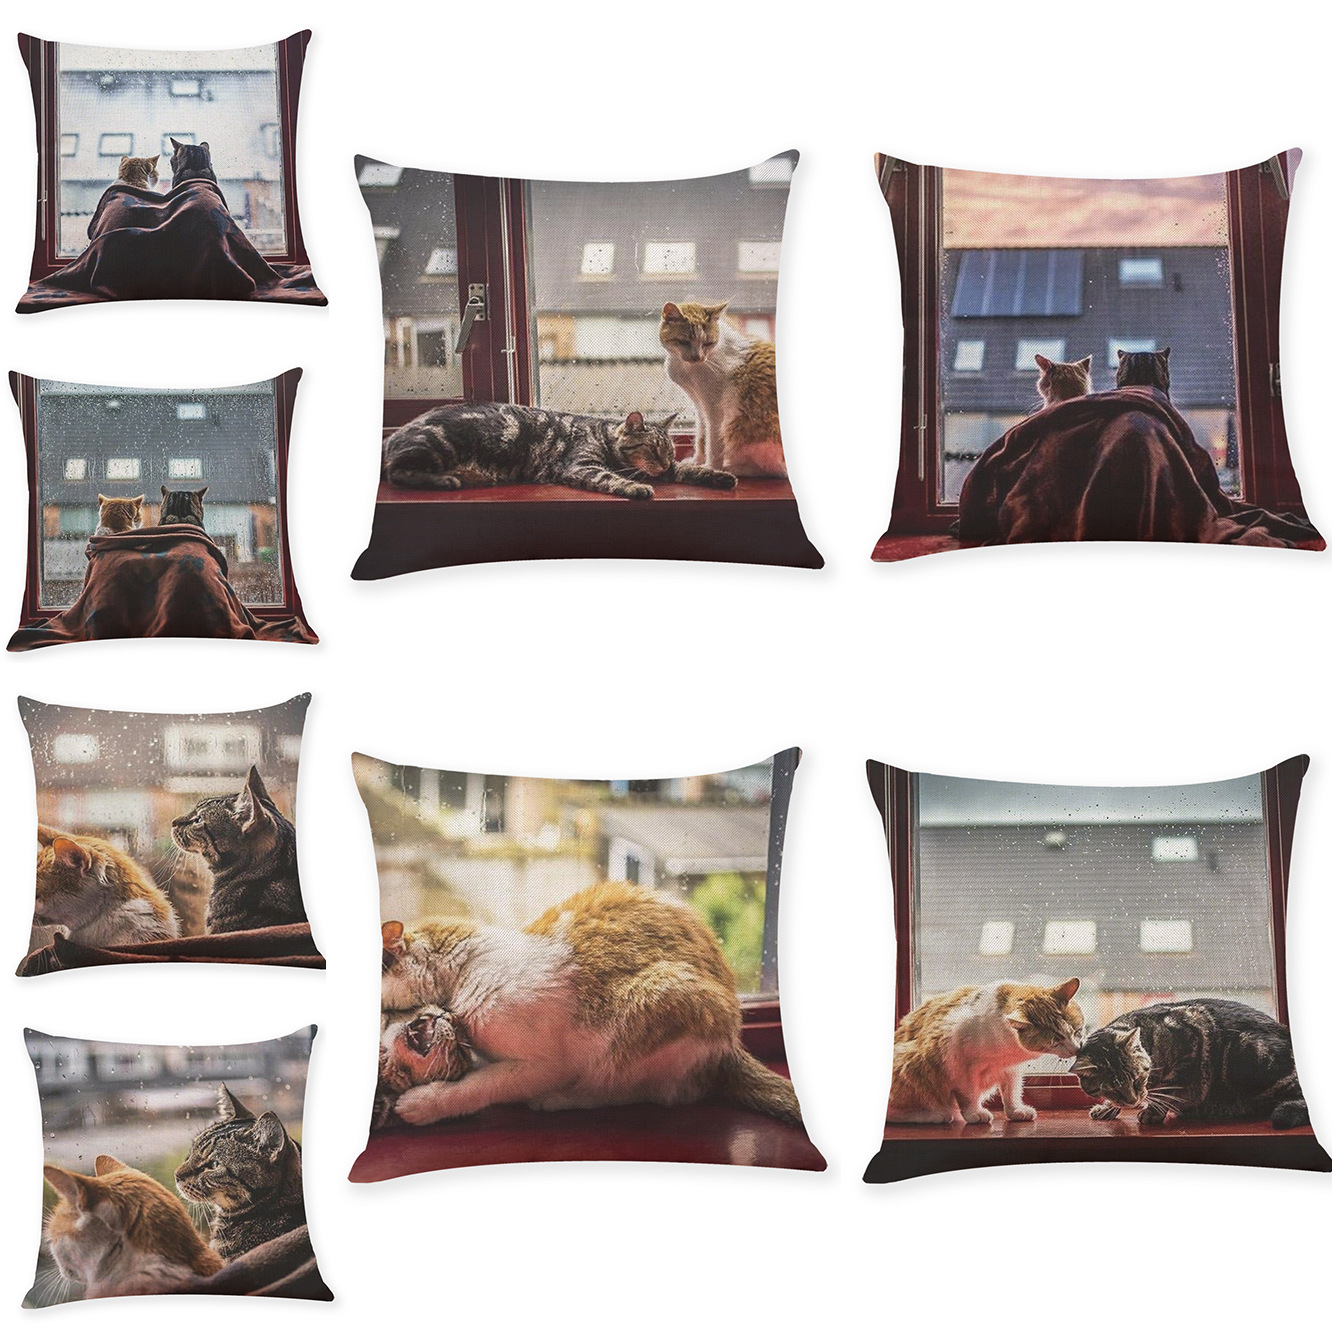 

Honana BX 45x45cm Cat Pattern Luxury Cushion Cover Graffi Style Throw Pillow Case Pillow Covers